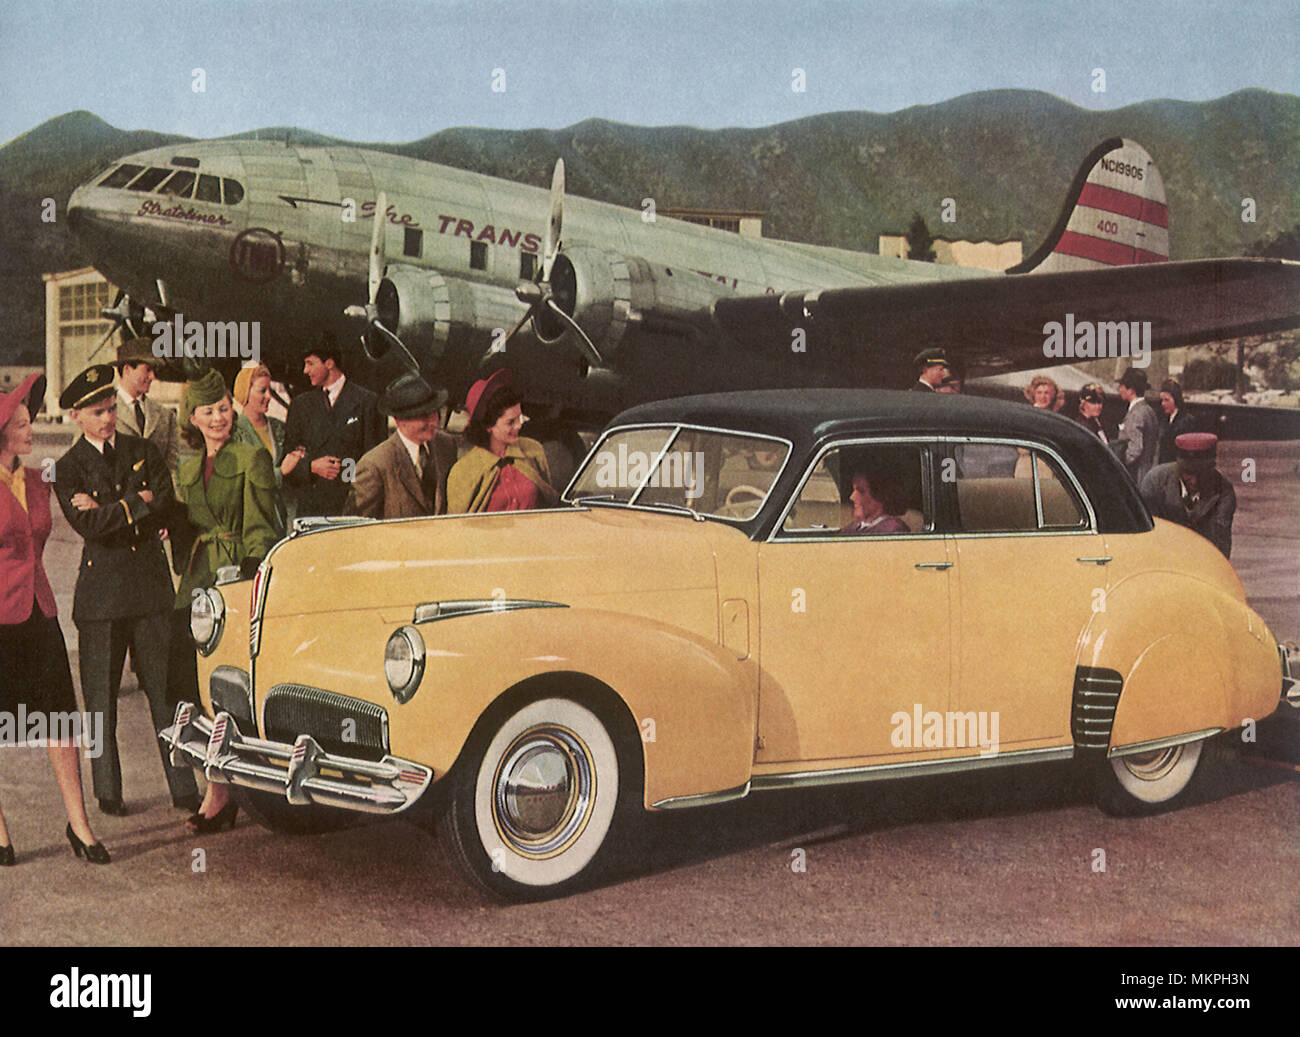 1941 Studebaker Skyway Series Stock Photo